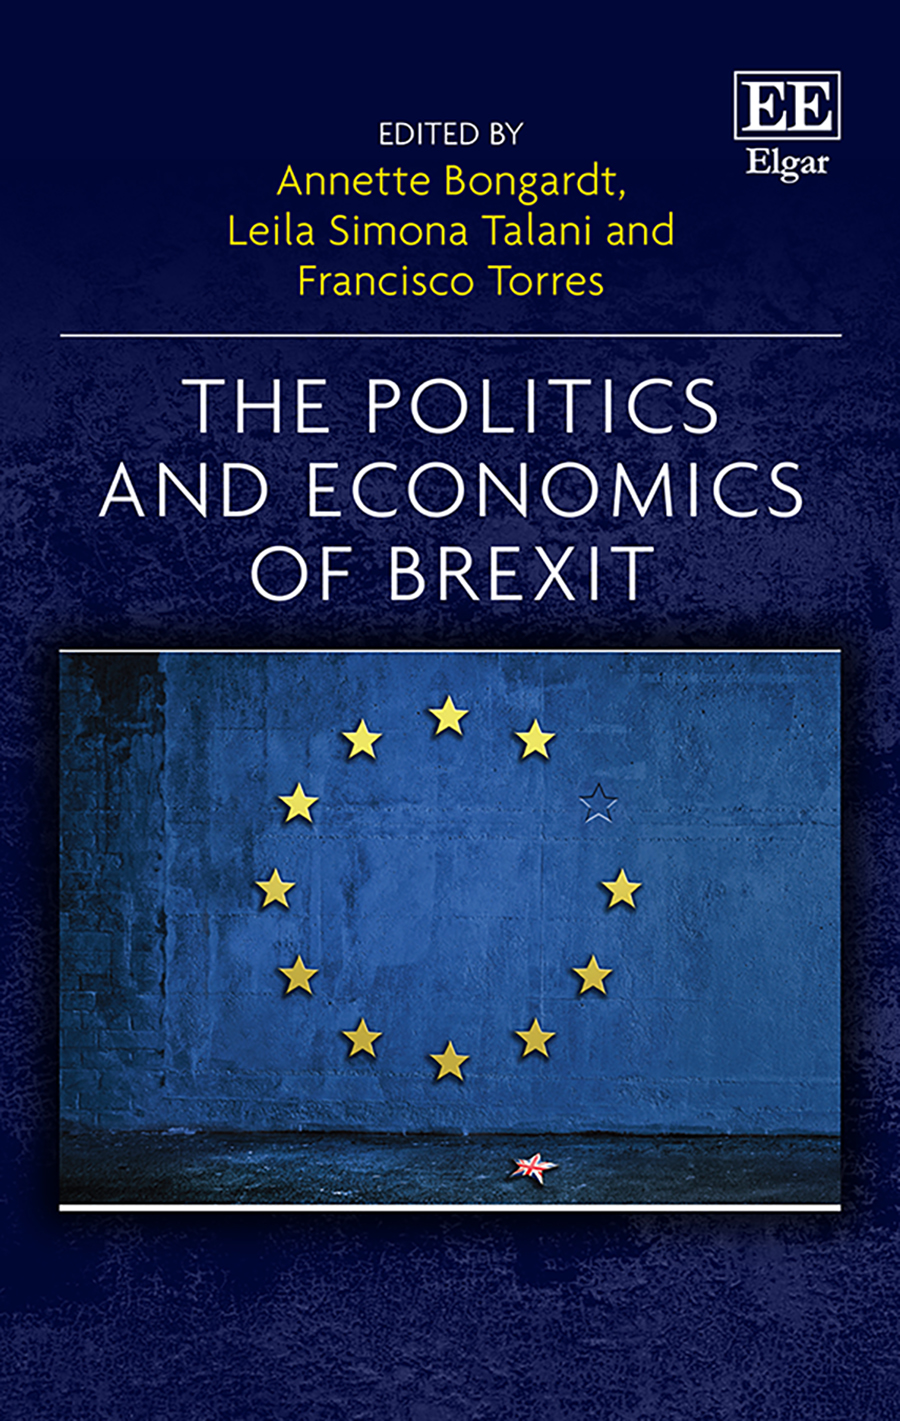 The Politics and Economics of Brexit